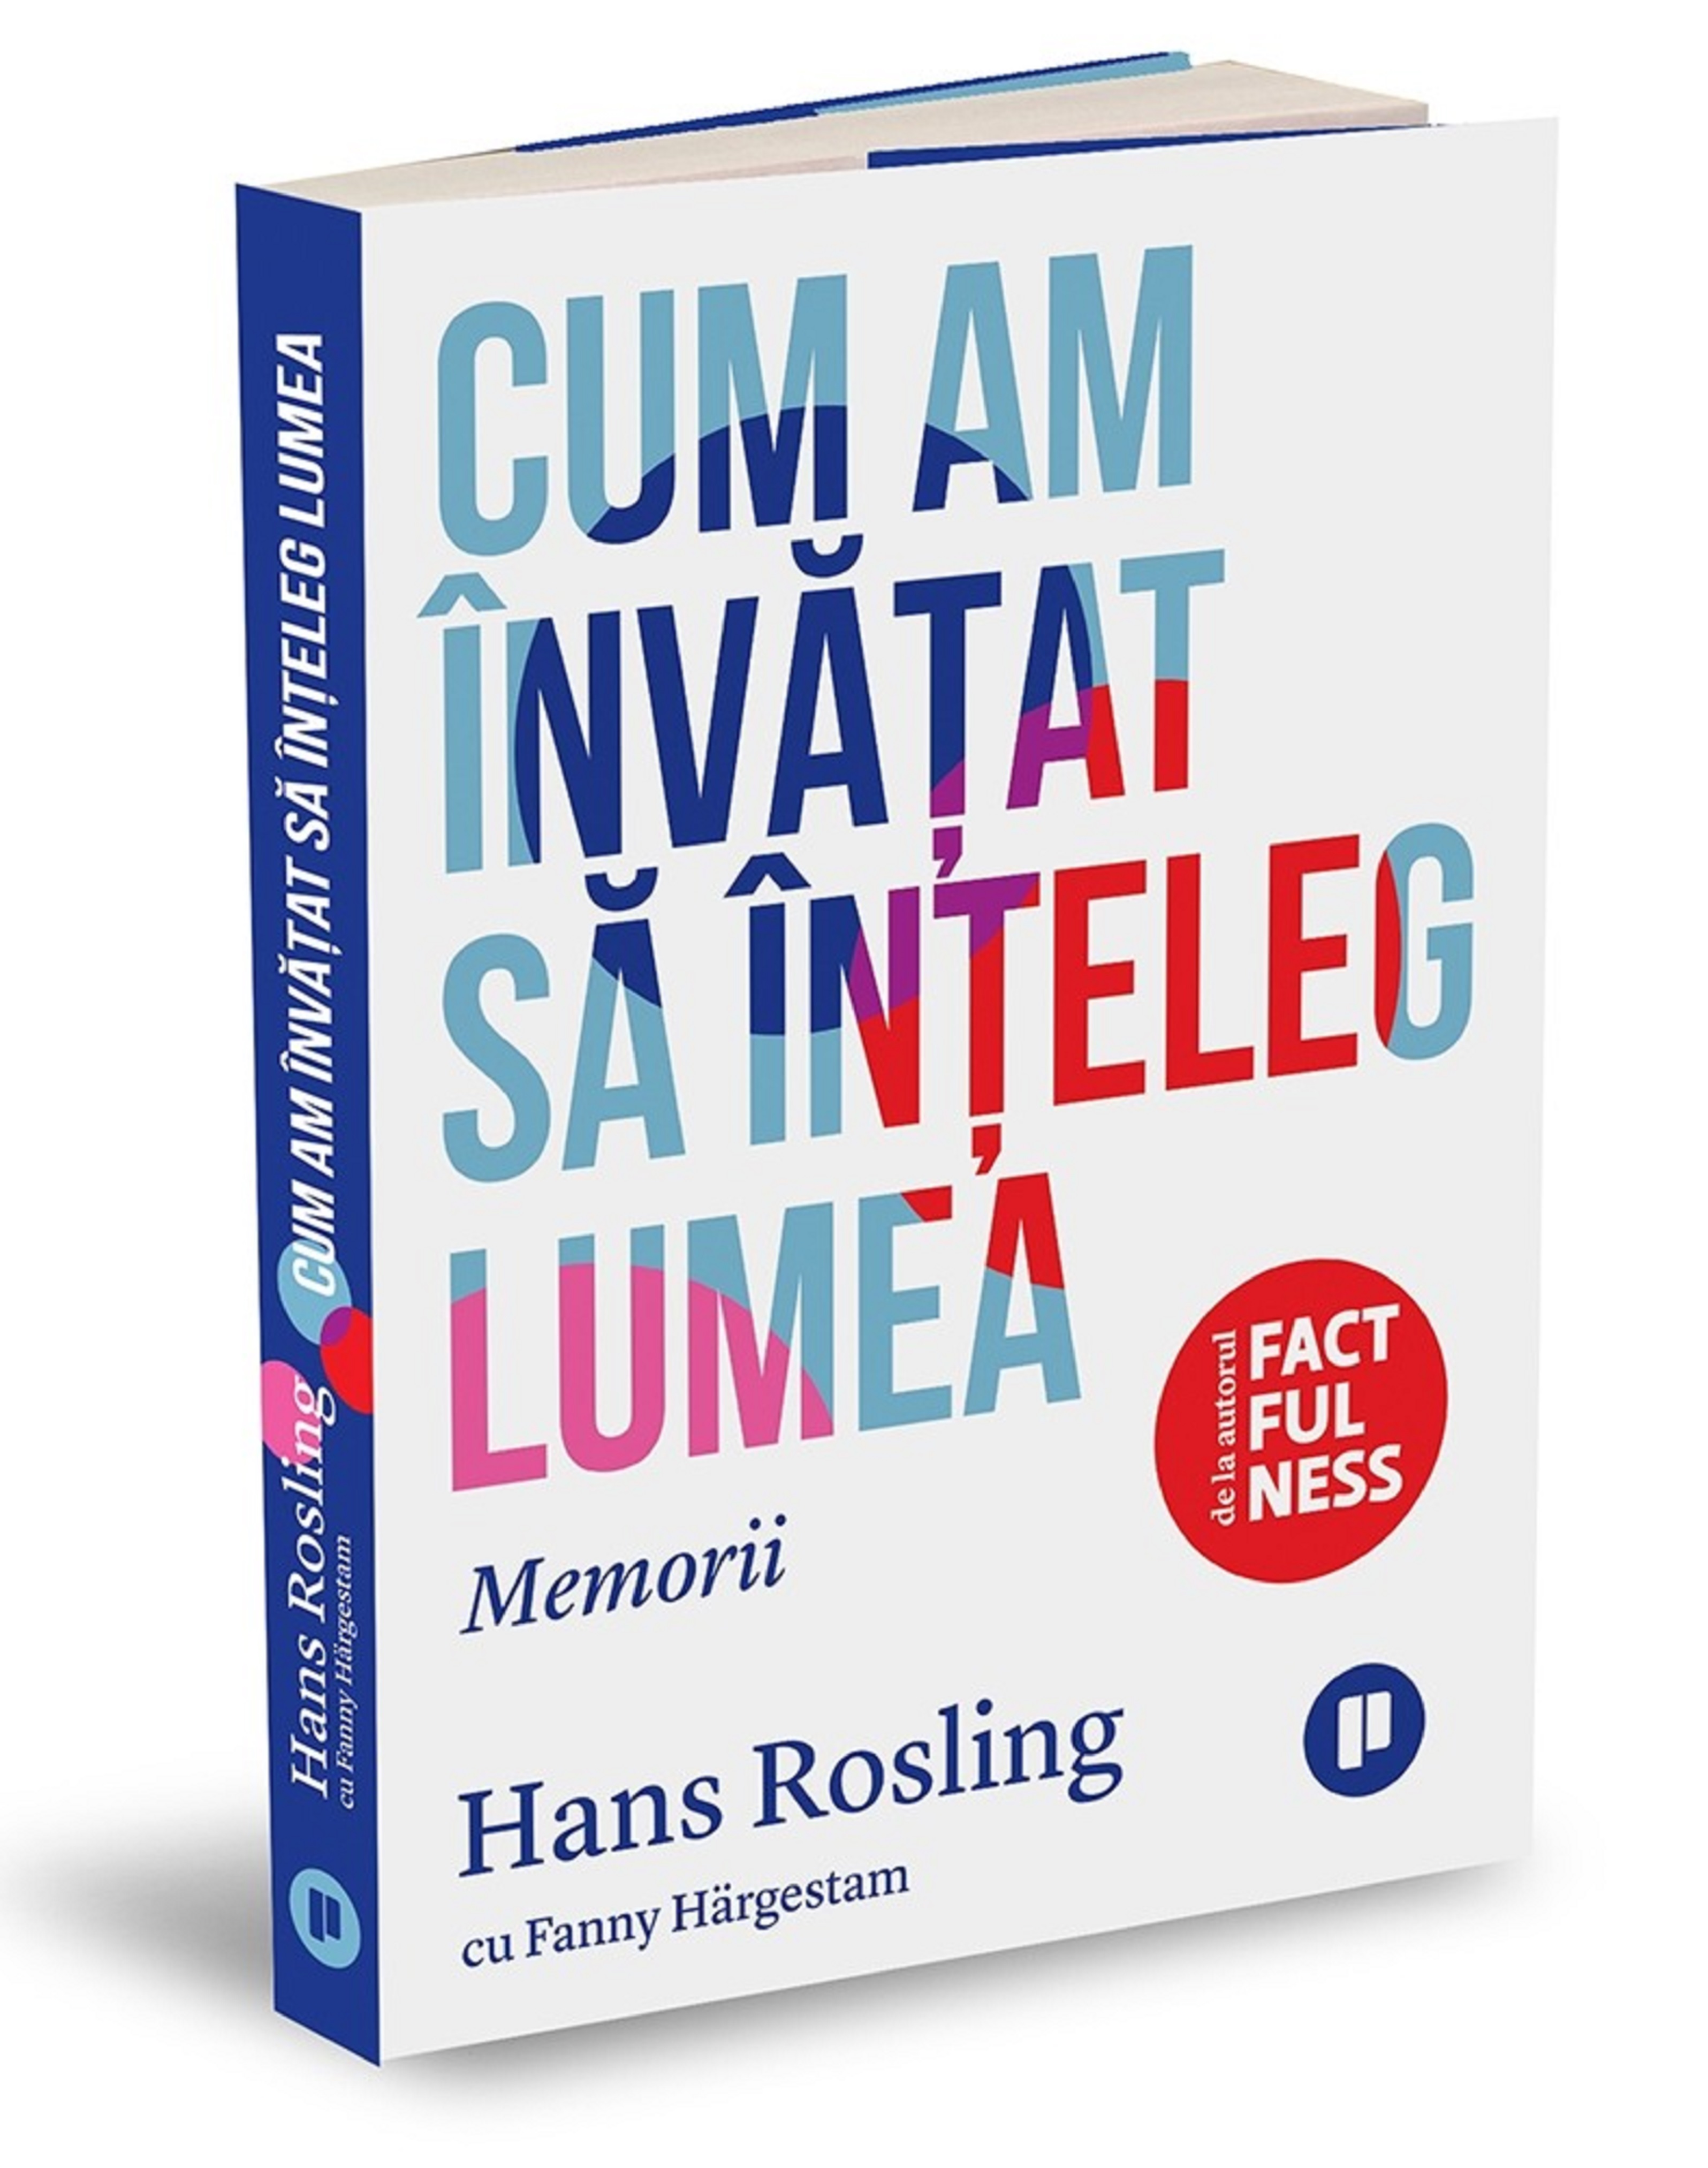 Cum am invatat sa inteleg lumea | Fanny Hargestam, Hans Rosling carturesti.ro poza bestsellers.ro